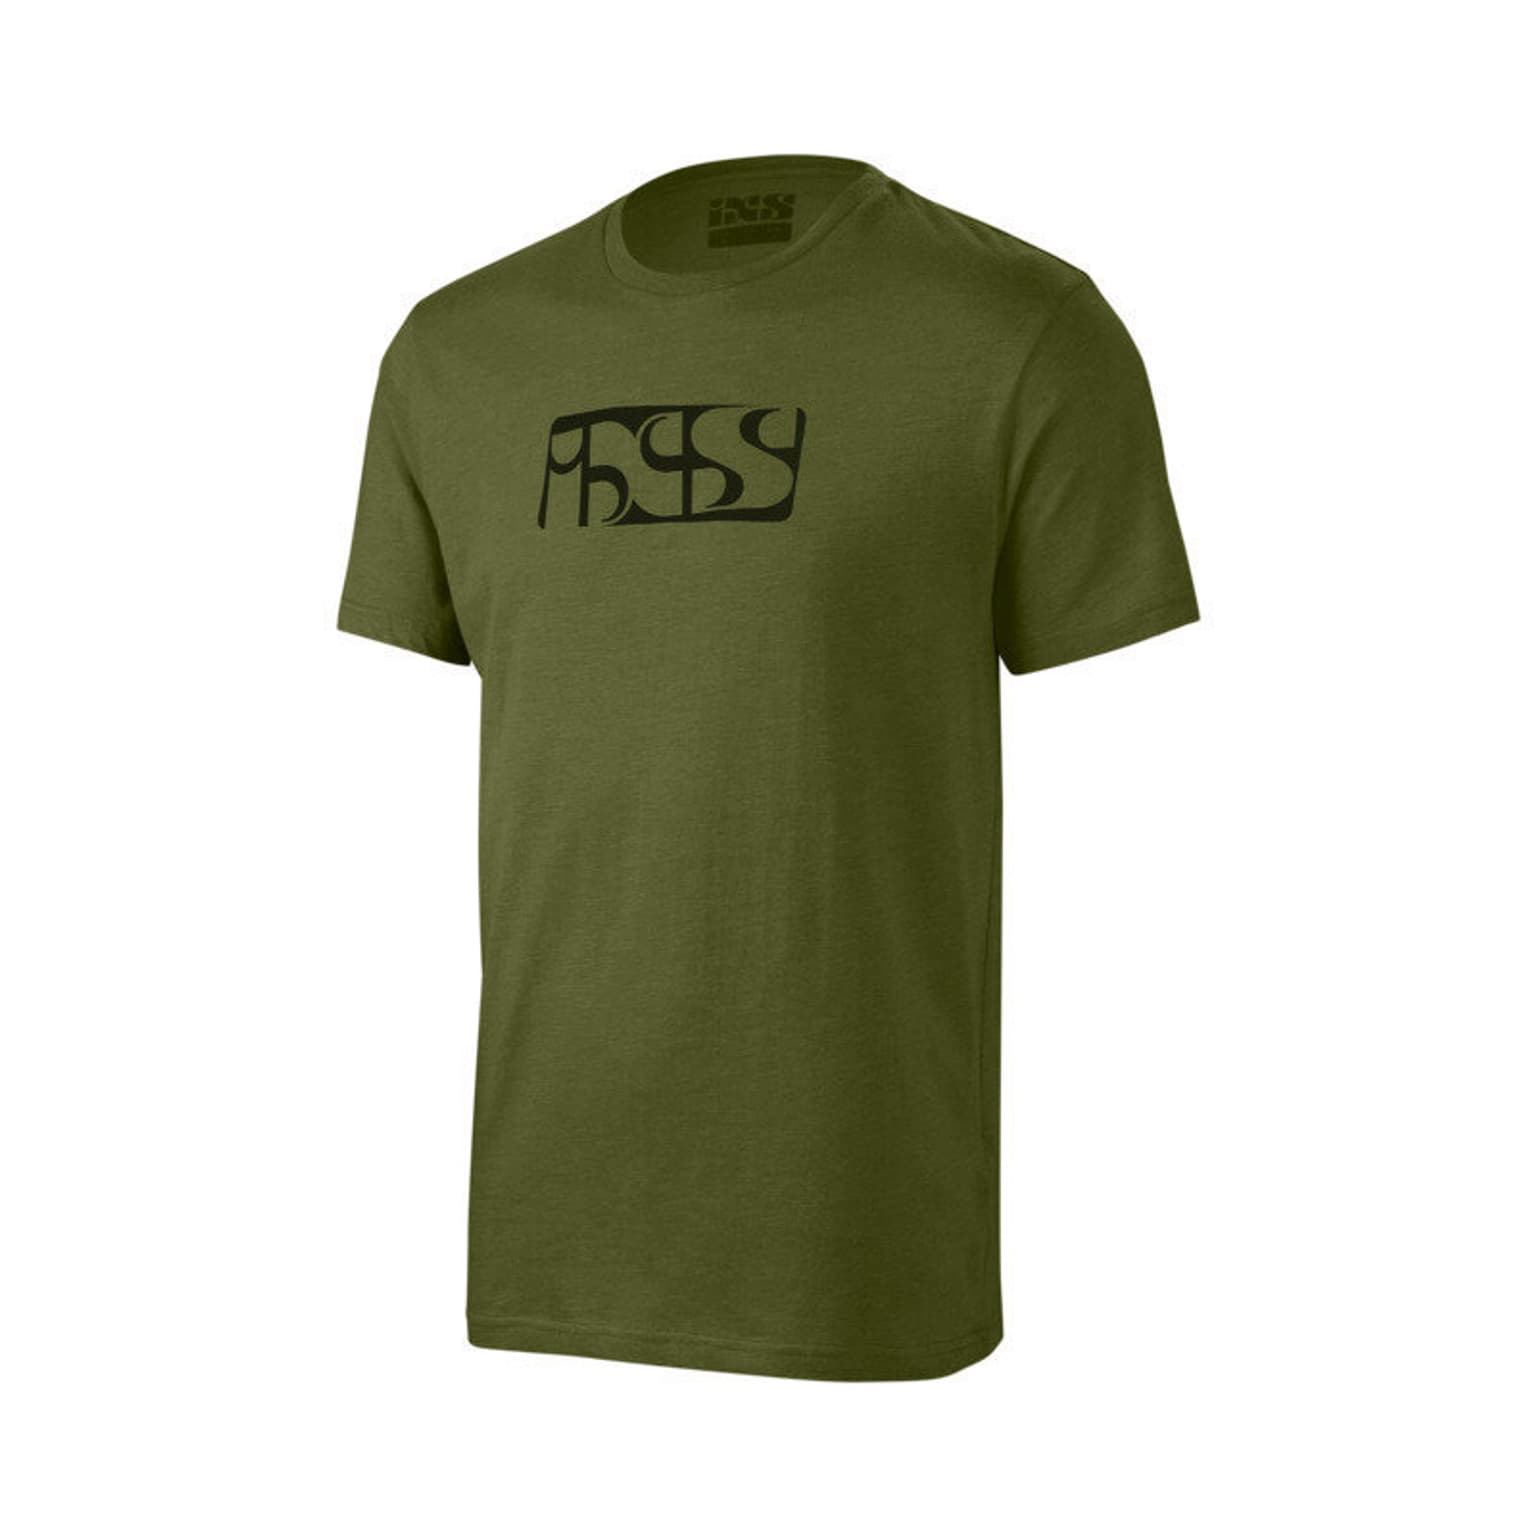 iXS iXS iXS Brand Tee T-Shirt olive 1